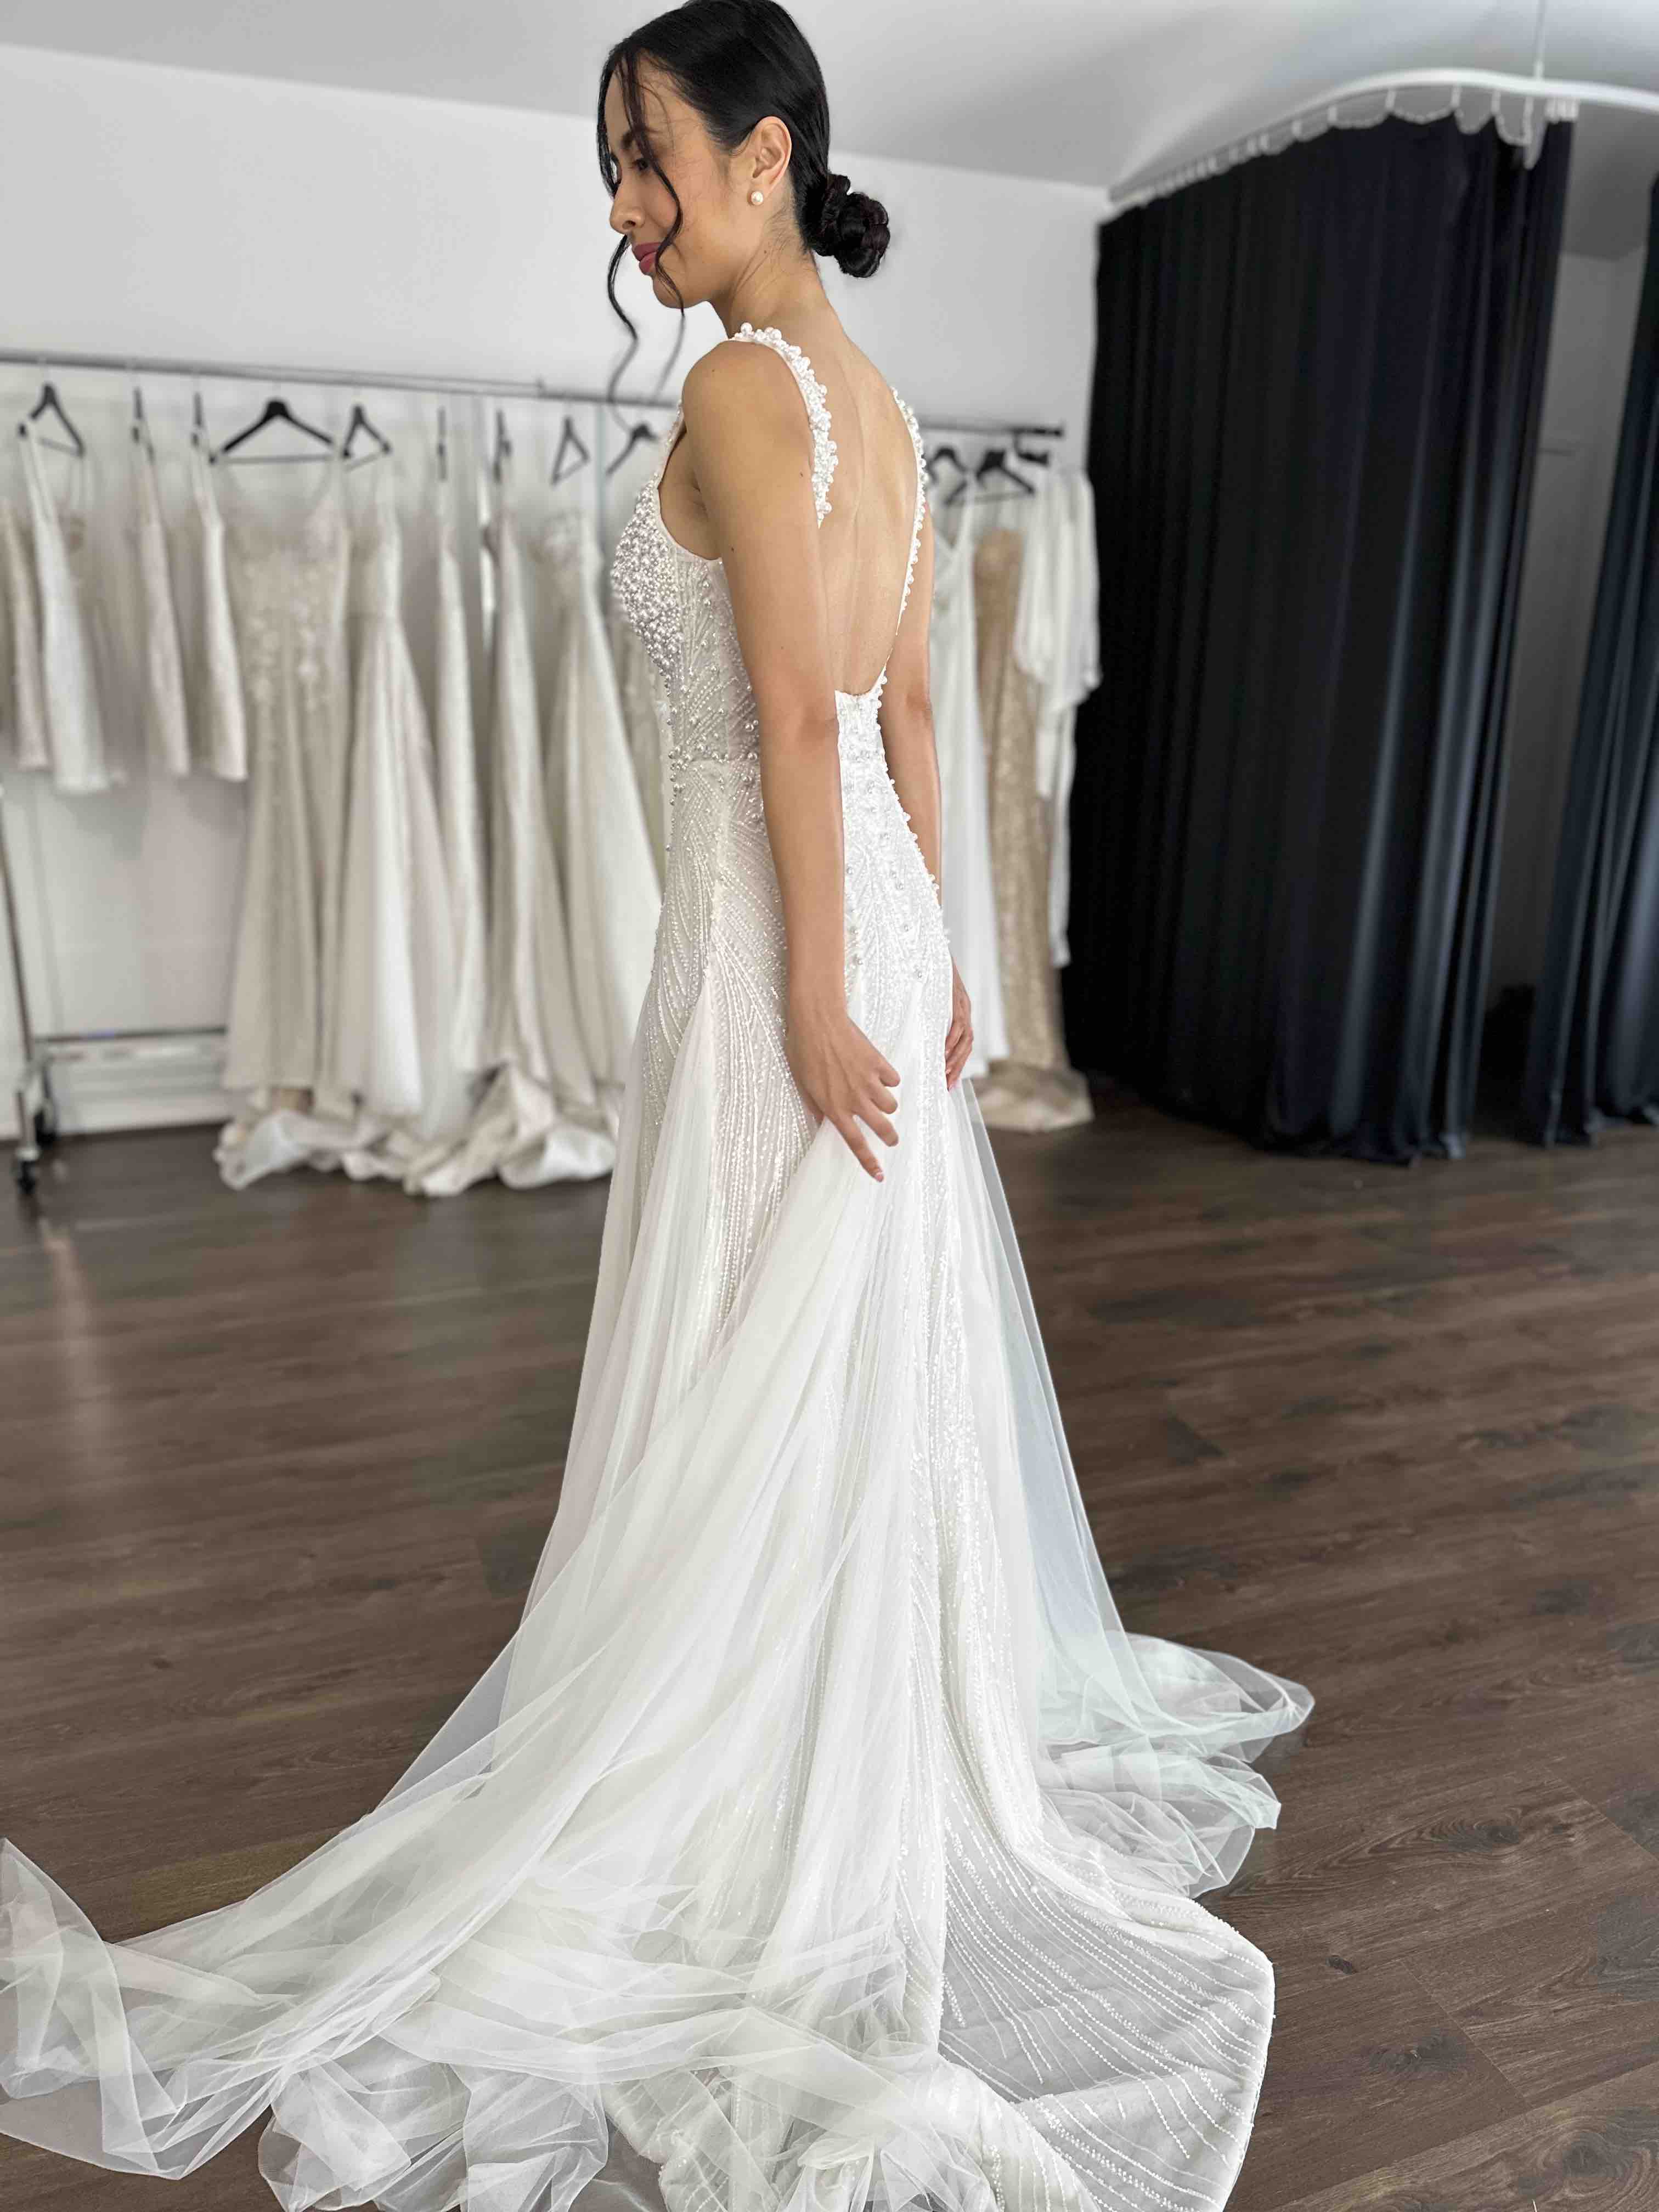 bride spinning around showroom in wedding gown